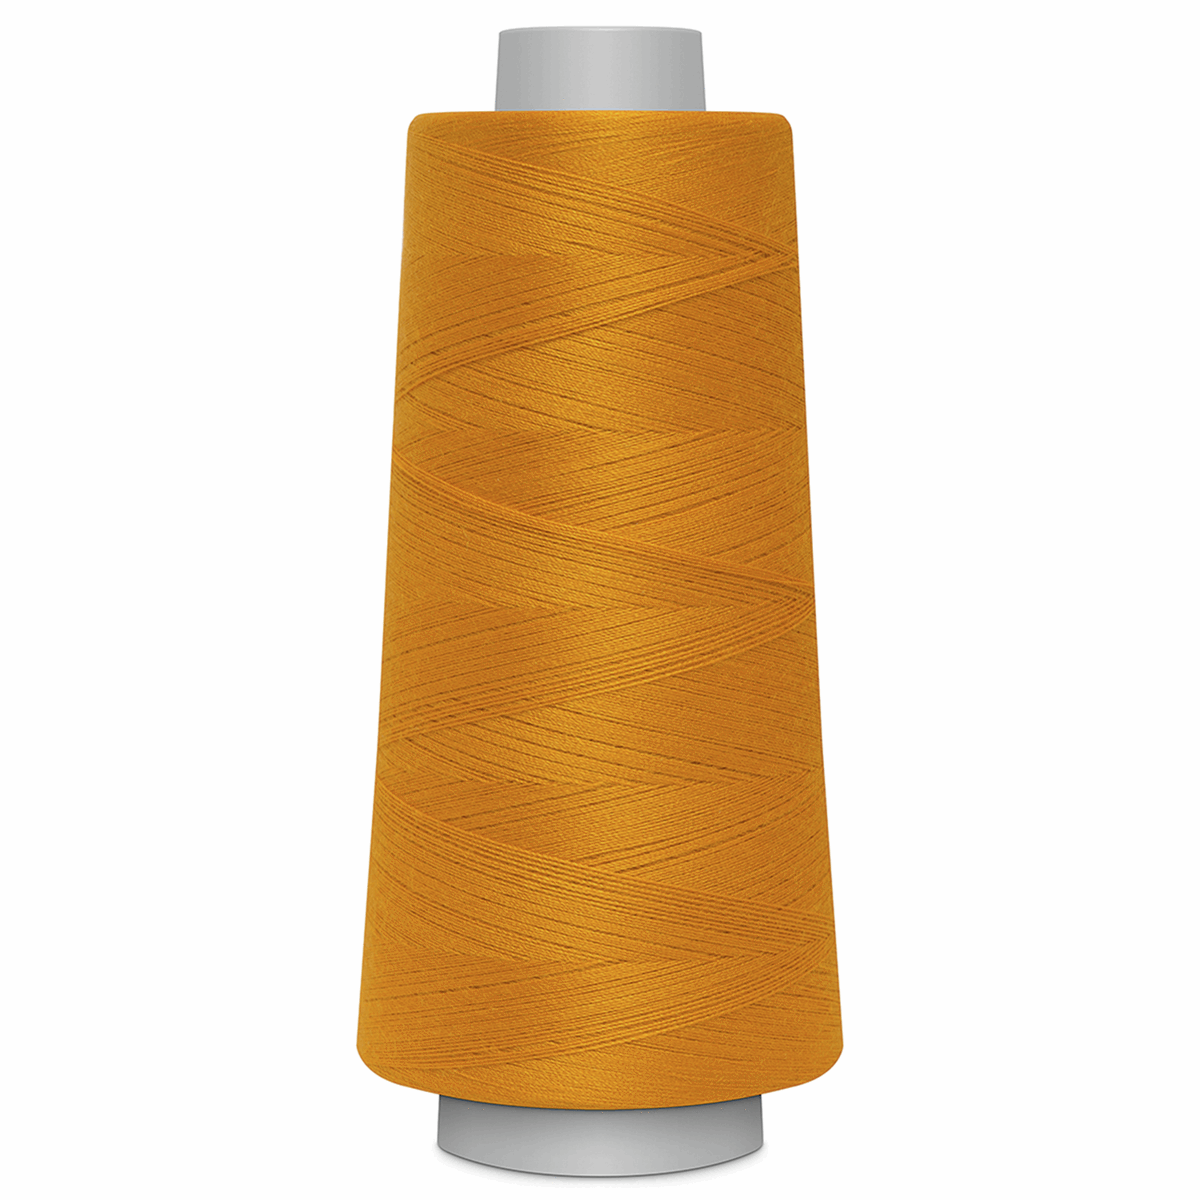 Gutermann TOLDI-LOCK Overlock Thread - Orange| 2500m from Jaycotts Sewing Supplies